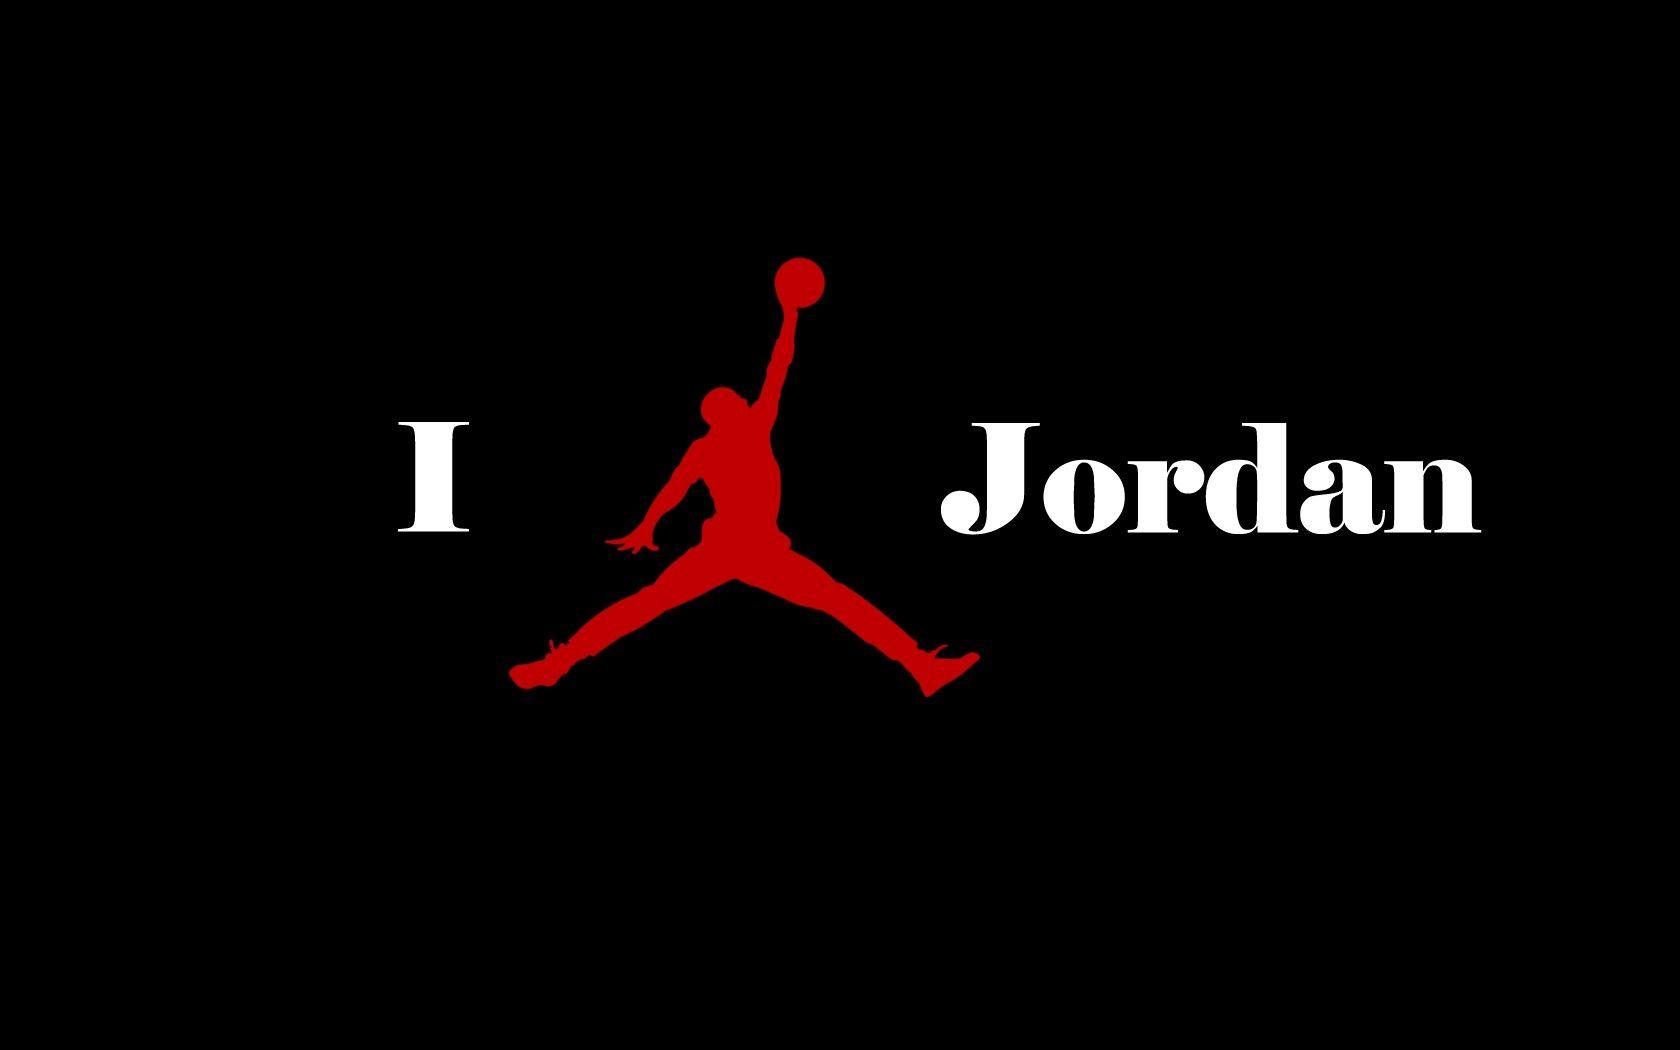 Michael Jordan Logo 80 117172 Image HD Wallpaper. Wallfoy.com